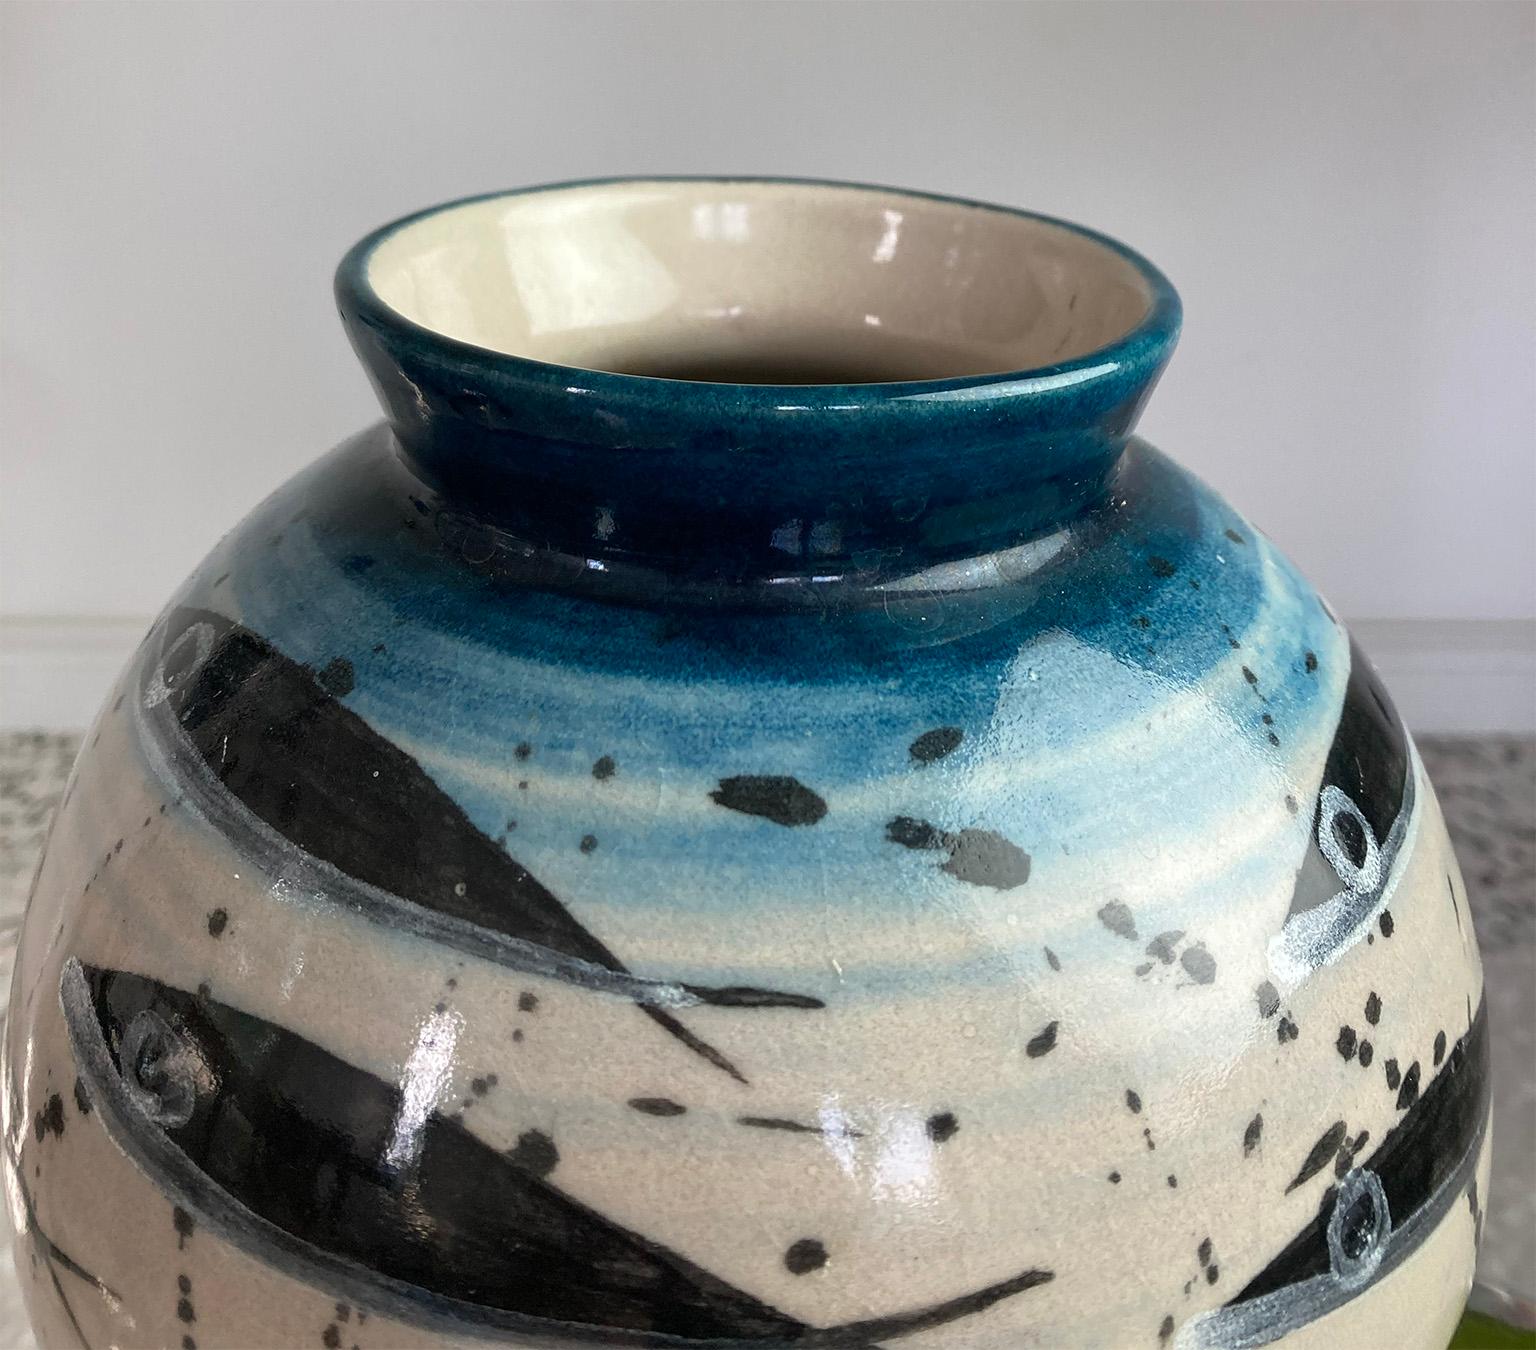 Turned Italian Ceramic Vase ’Alici’ by Ceramist Lucio Liguori, Vietri Sul Mare Amalfi